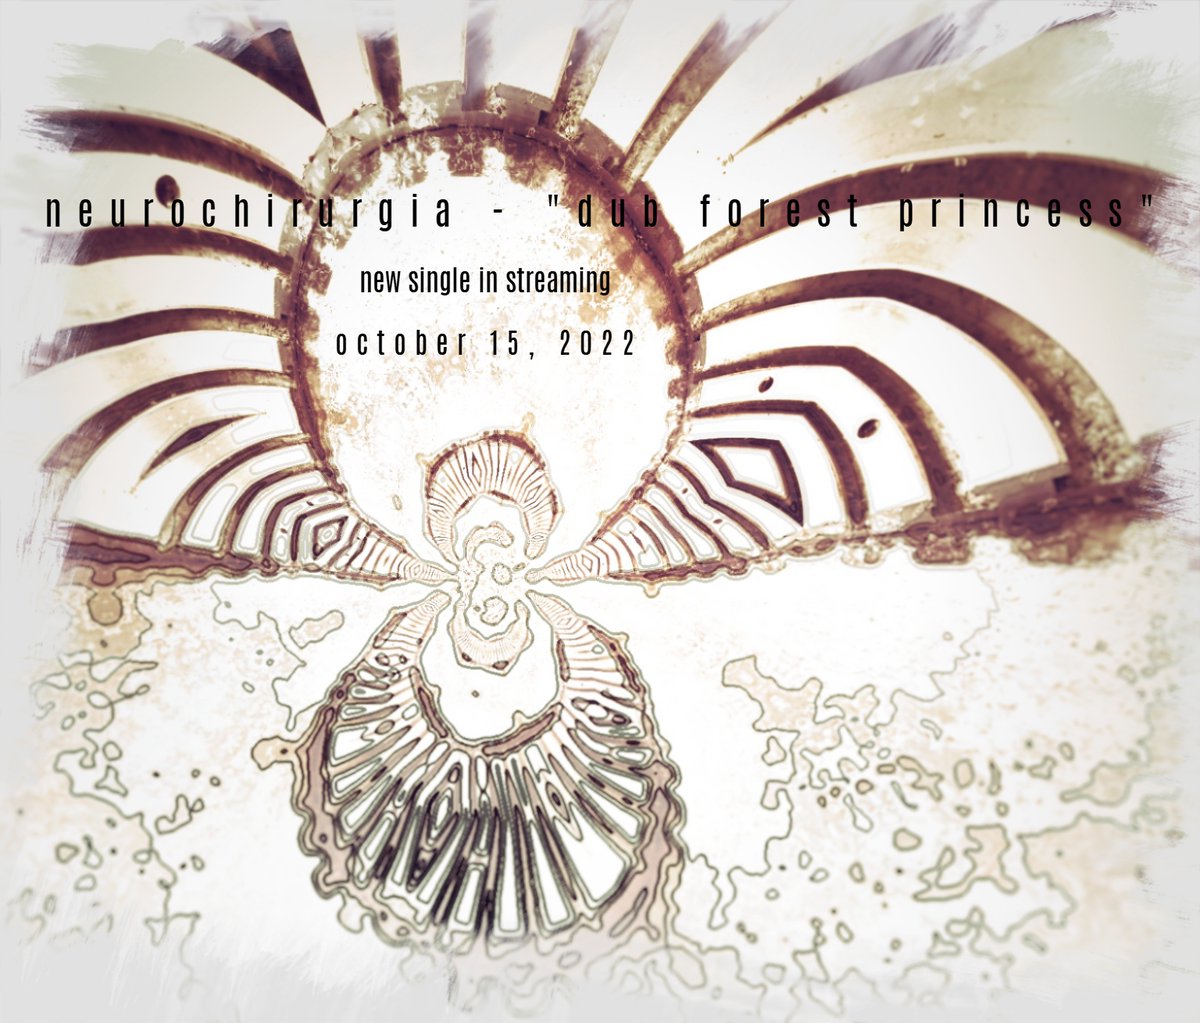 neurochirurgia releases new single 'dub forest princess' october 15, 2022.
#electronicmusic #ambientmusic #ambient #dronemusic #electronica #electronic #chillout #experimentalmusic #soundscape #lofi  #electronicmusician #muzykaelektroniczna #lofimusic #lofibeats